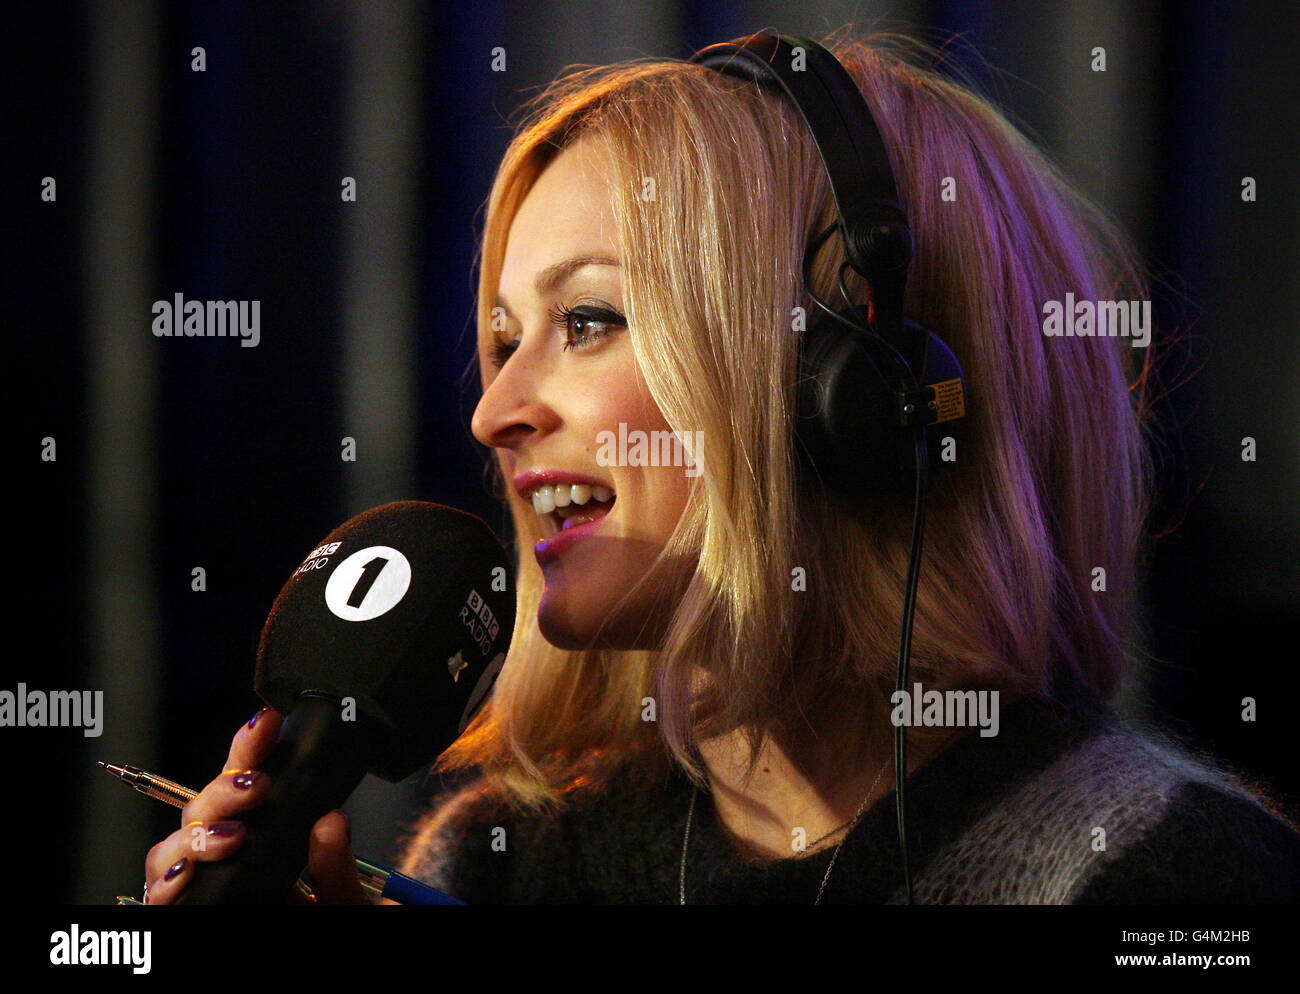 Radio 1 moderator -Fotos und -Bildmaterial in hoher Auflösung – Alamy